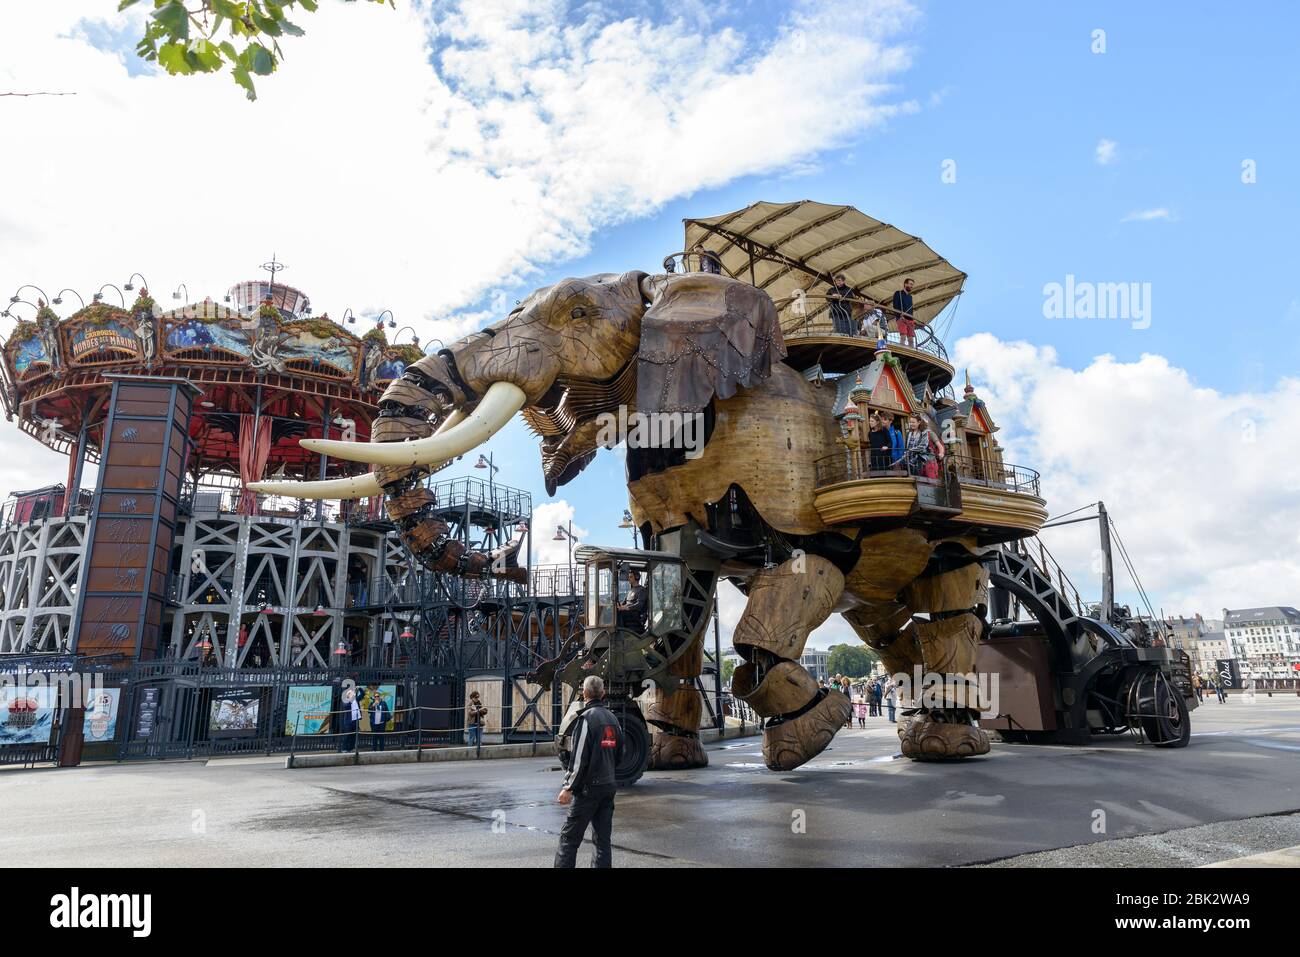 The Great Elephant of Nantes Stock Photo